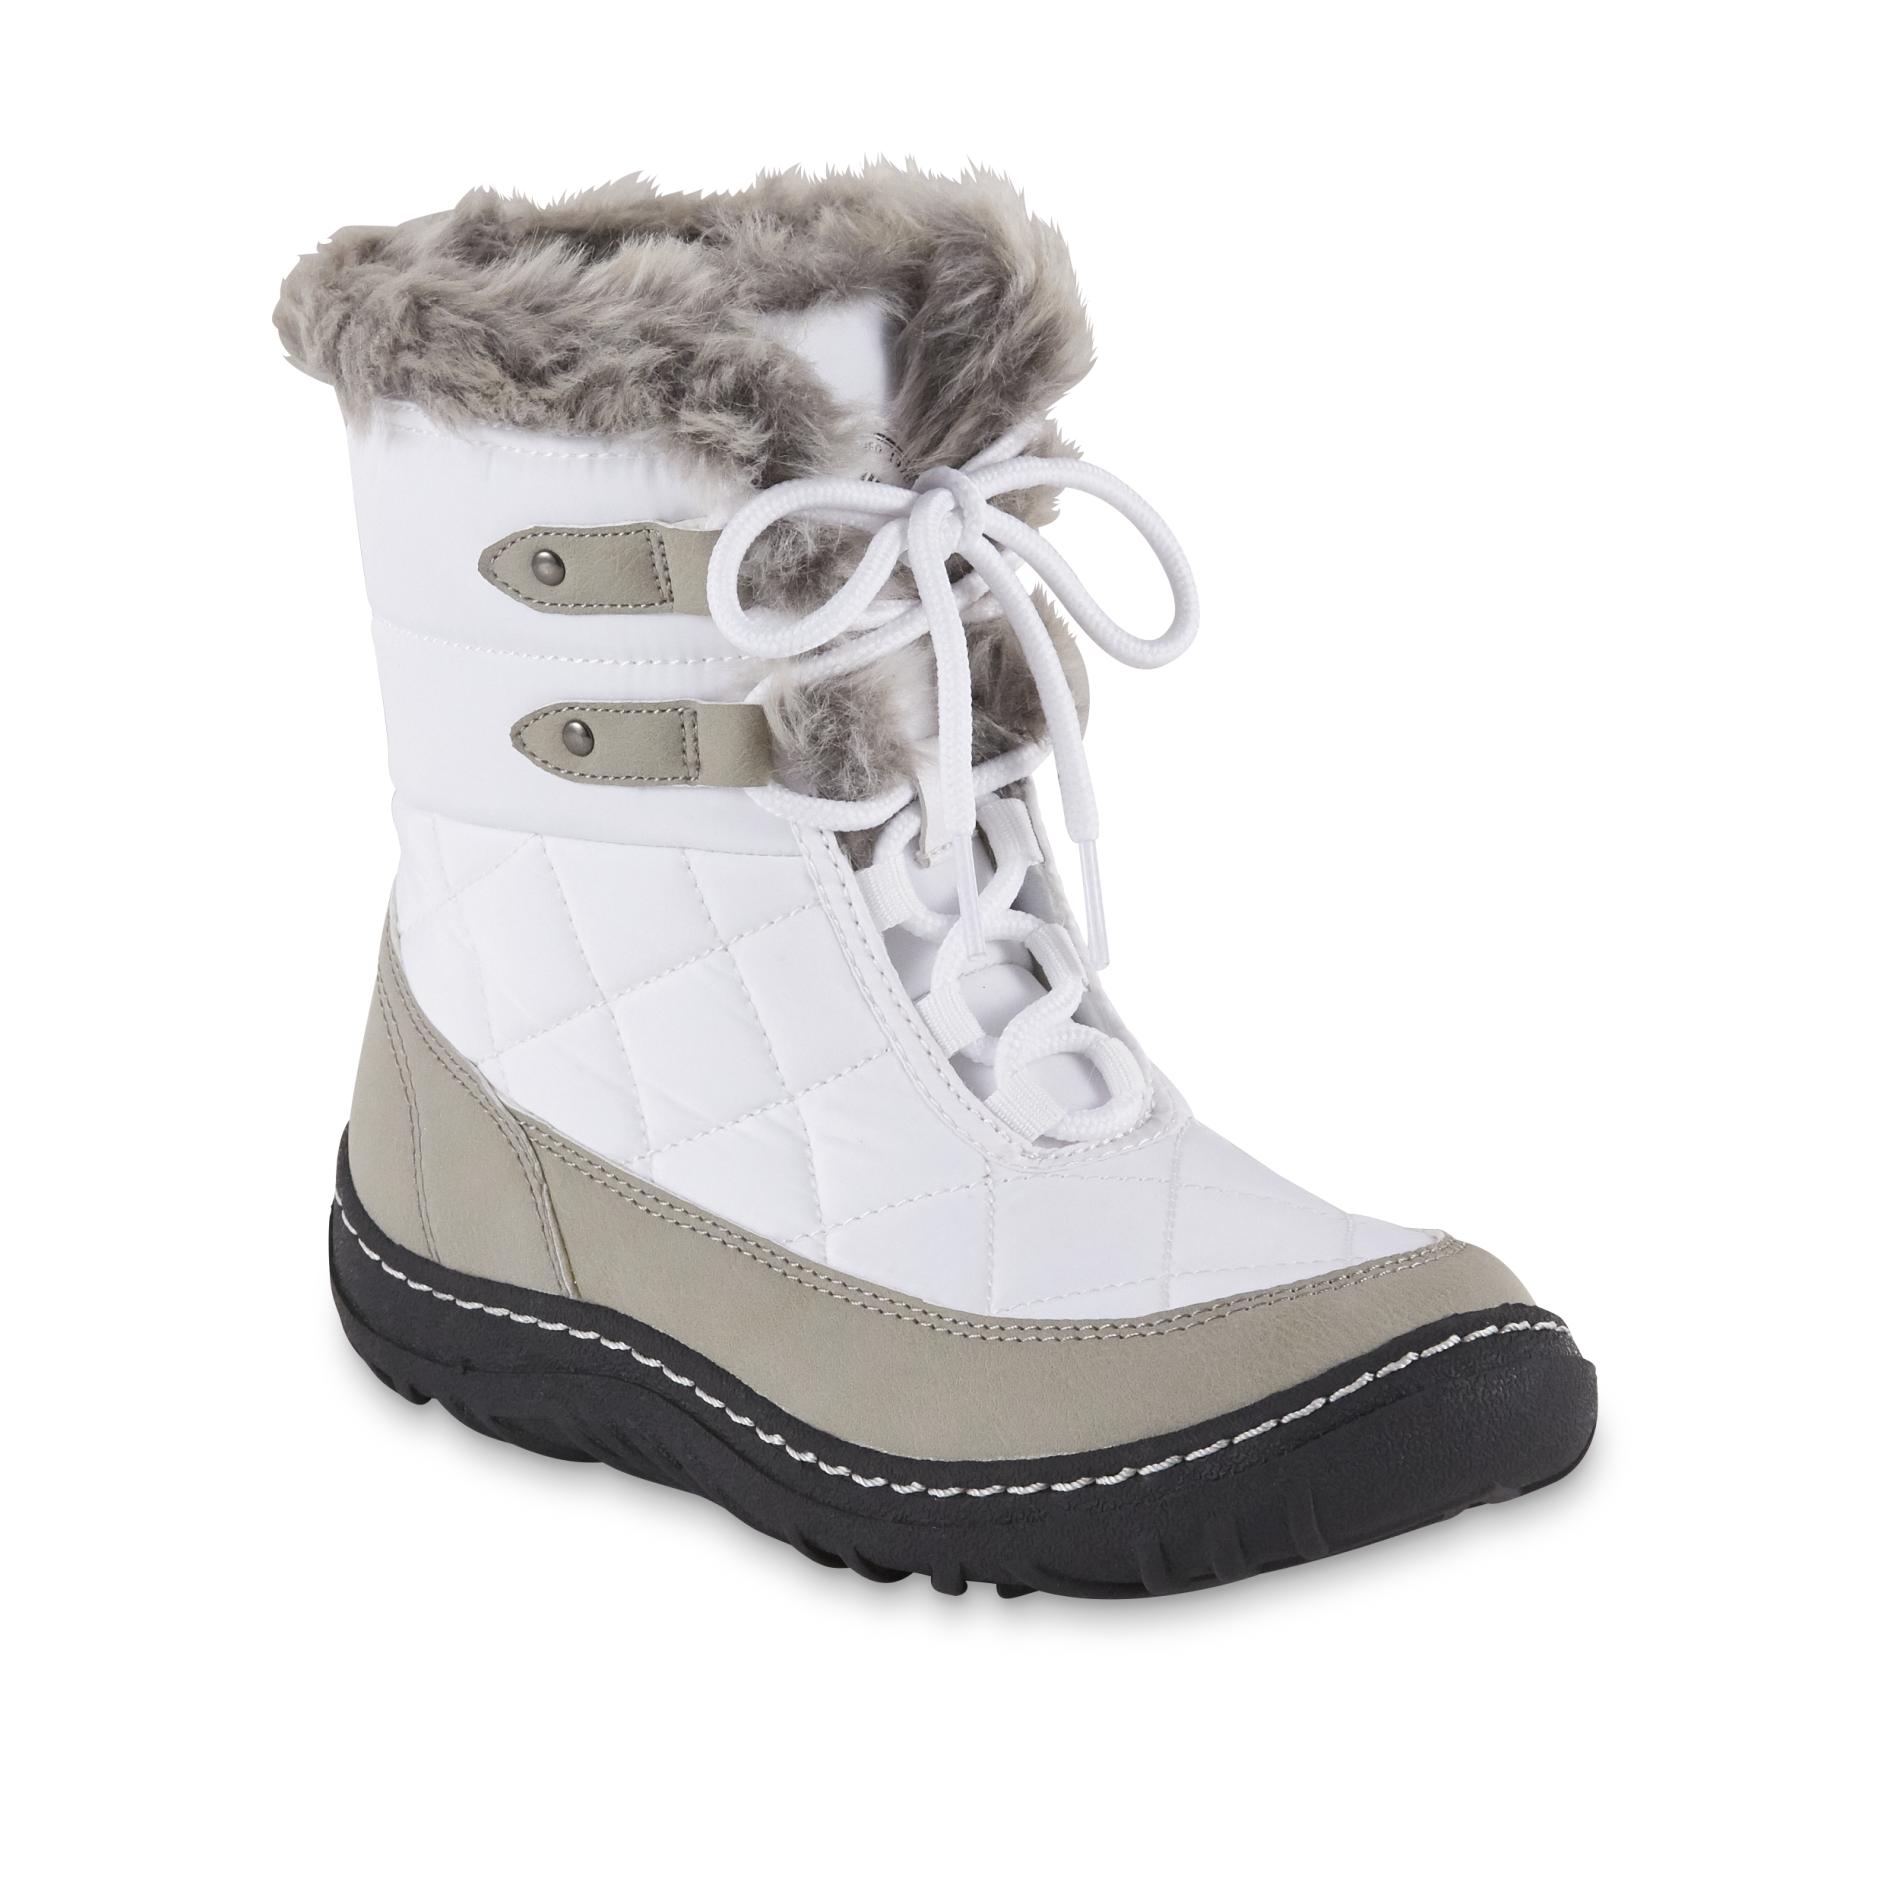 kmart snow boots